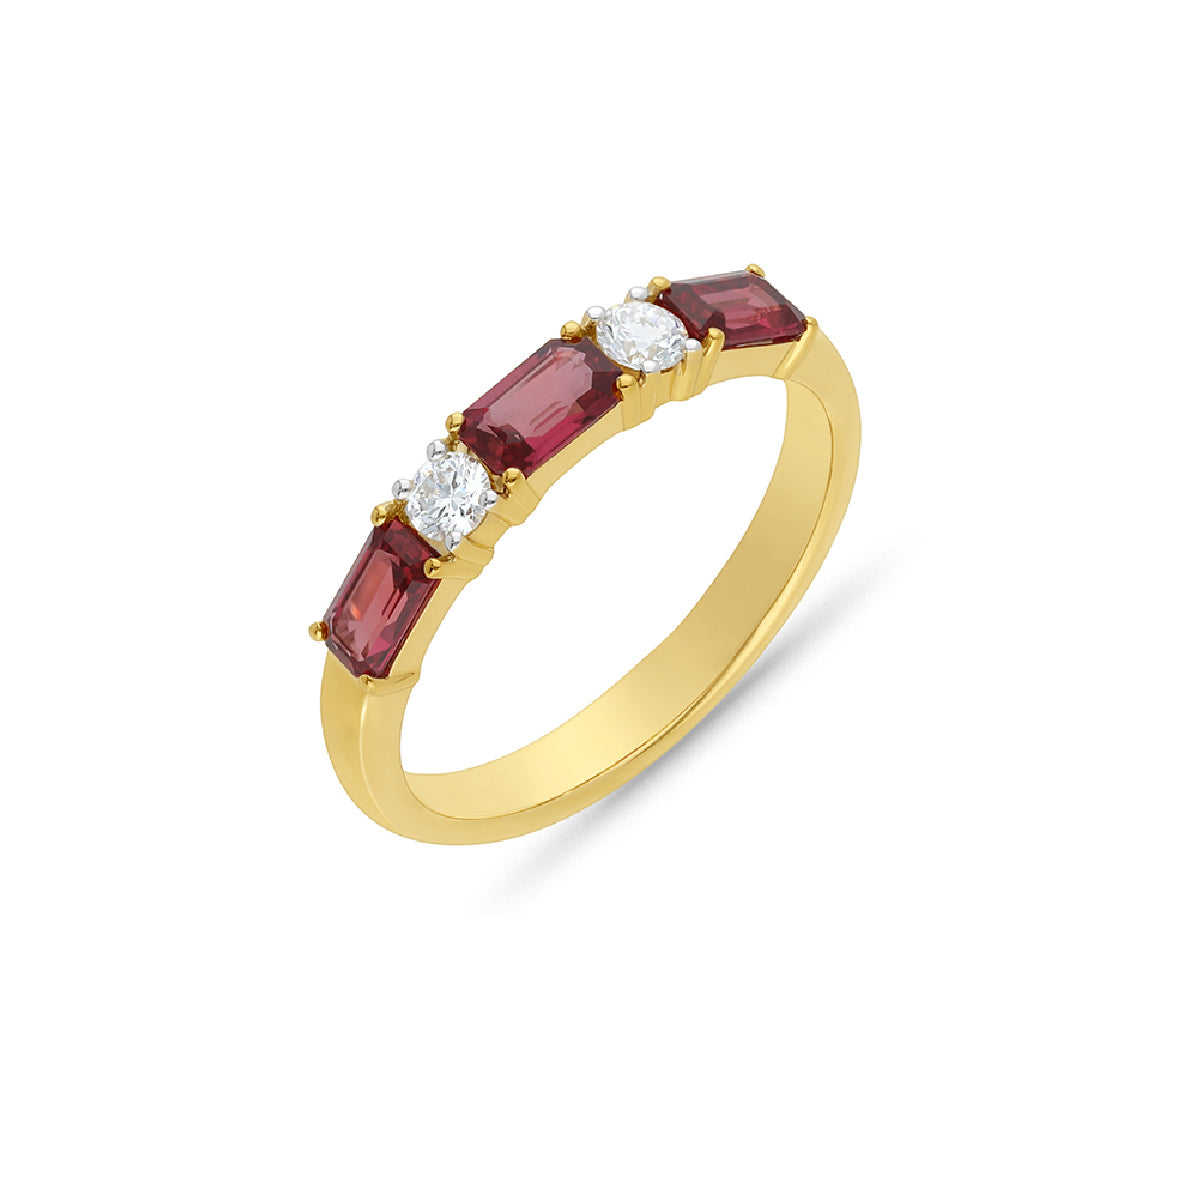 18ct Yellow Gold Ruby & Diamond Ring